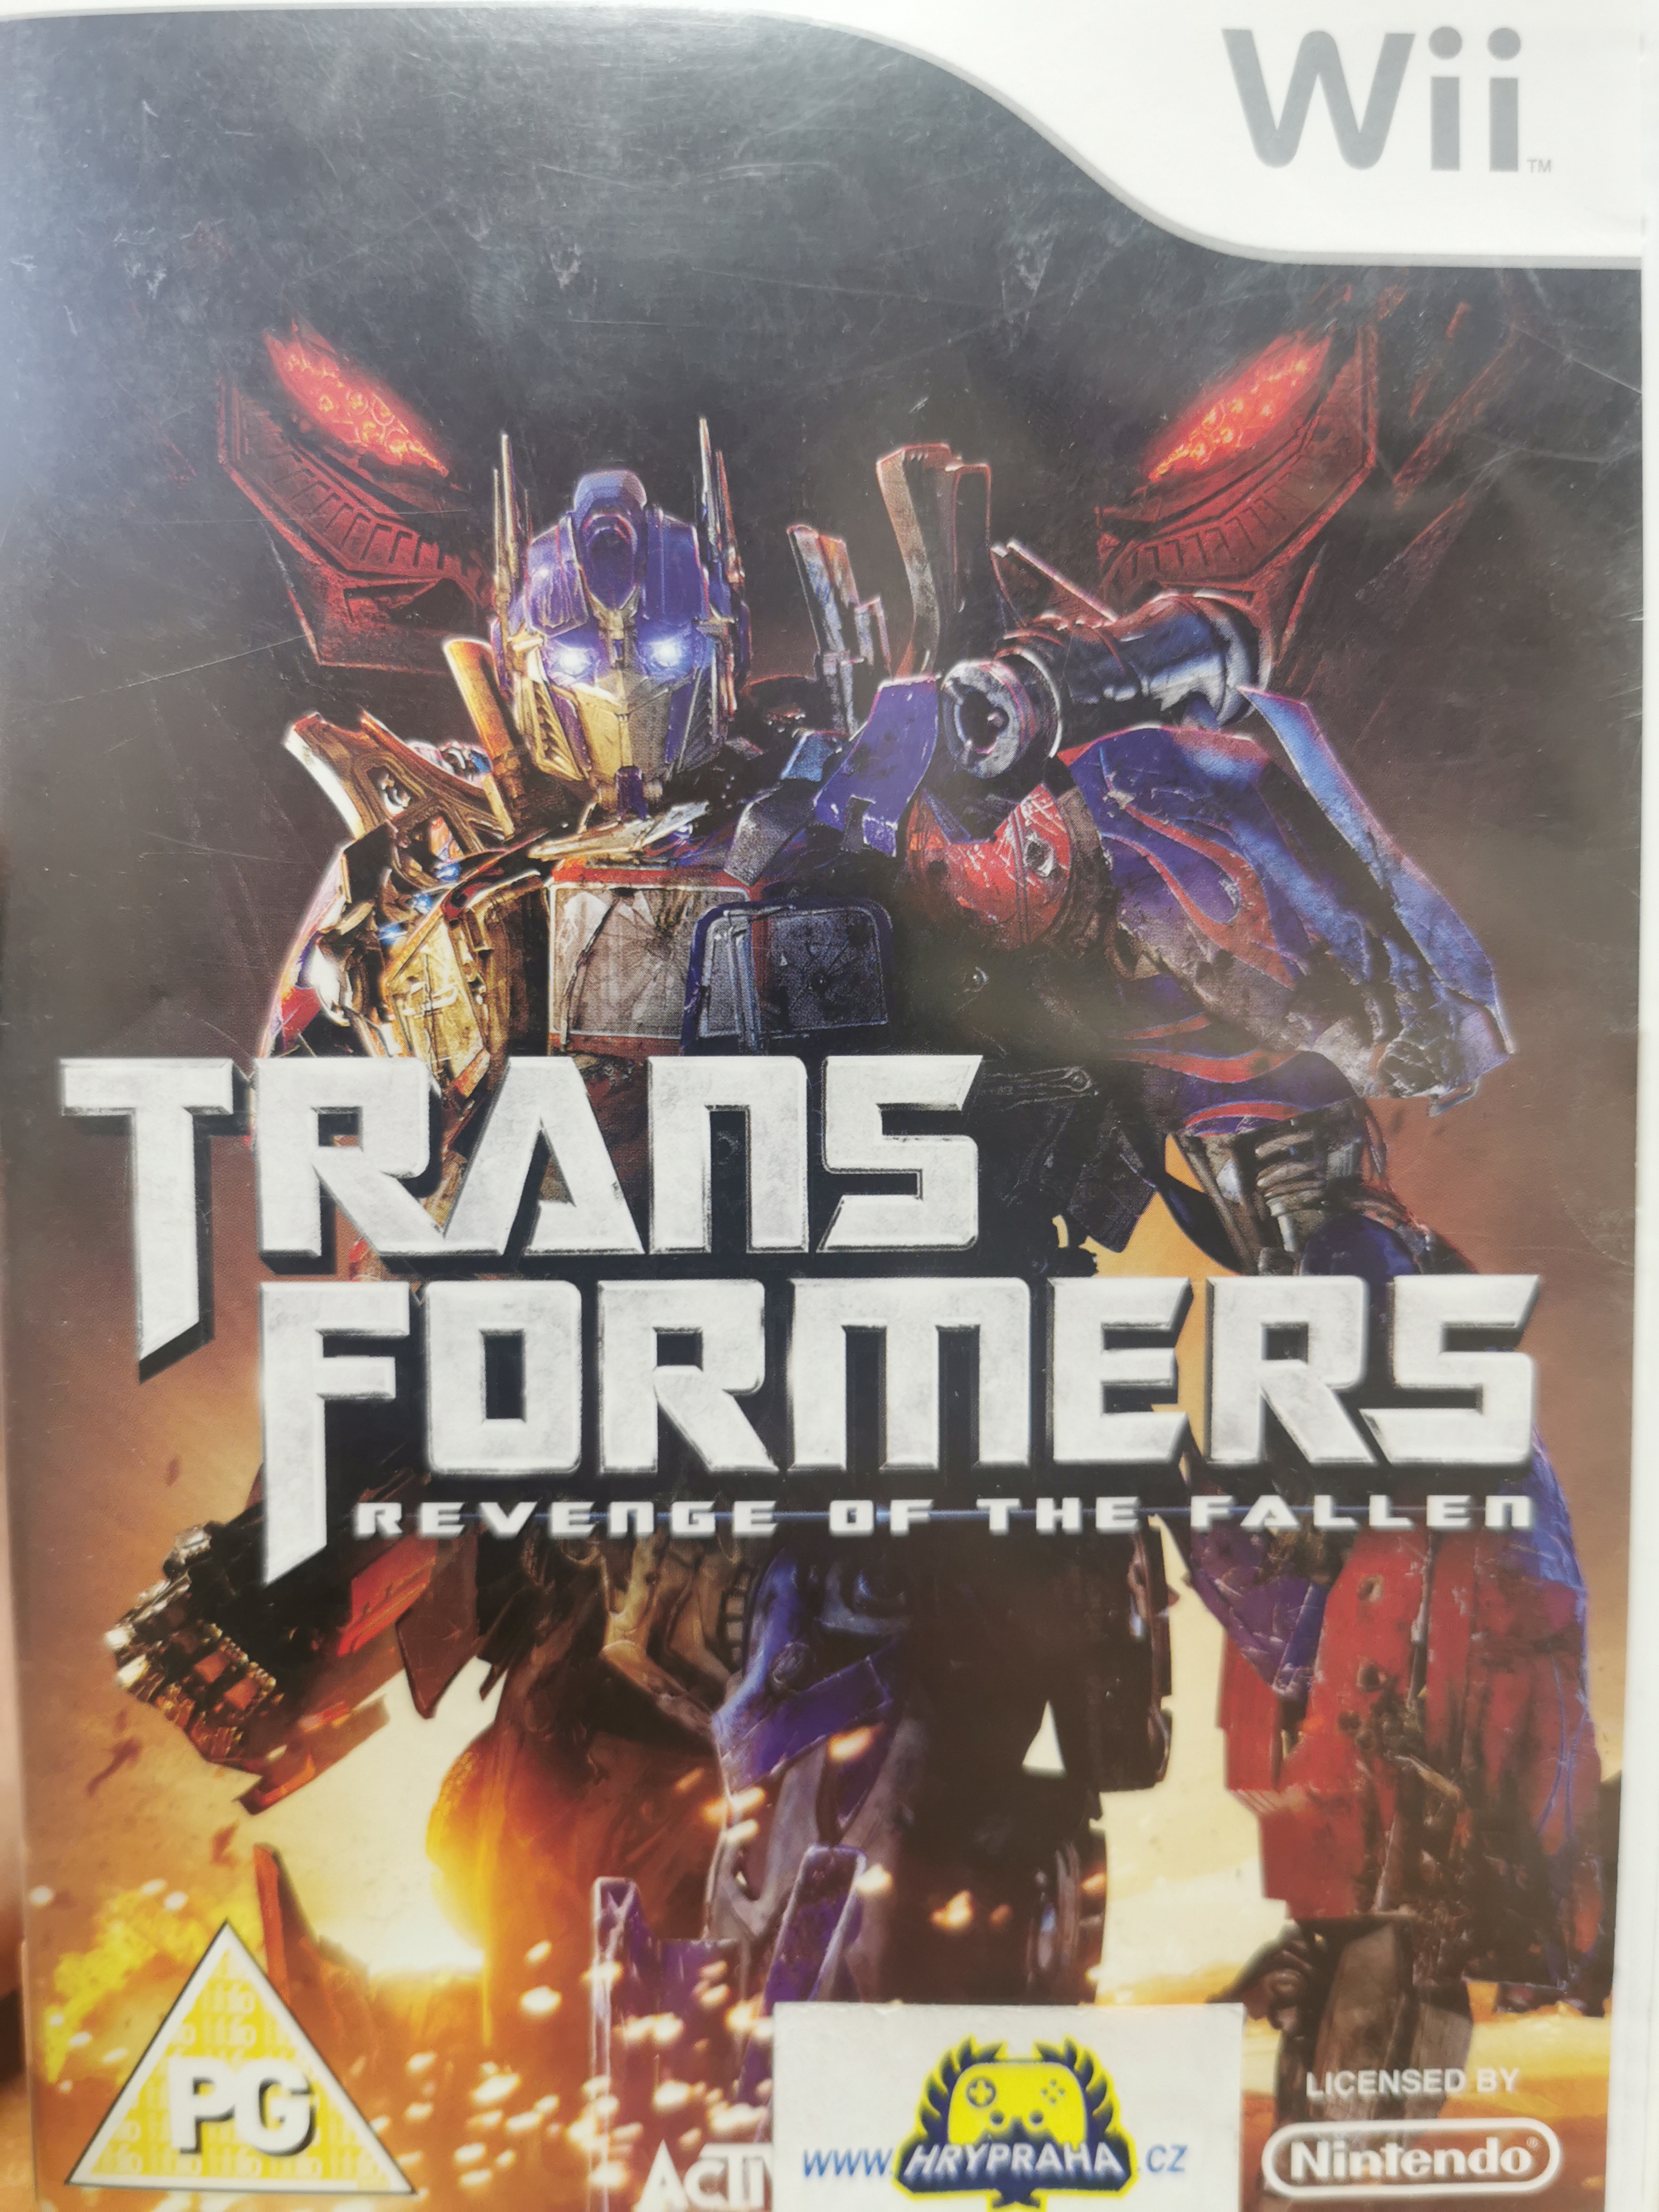  Transformers revenge of the fallen  - Nintendo wii 